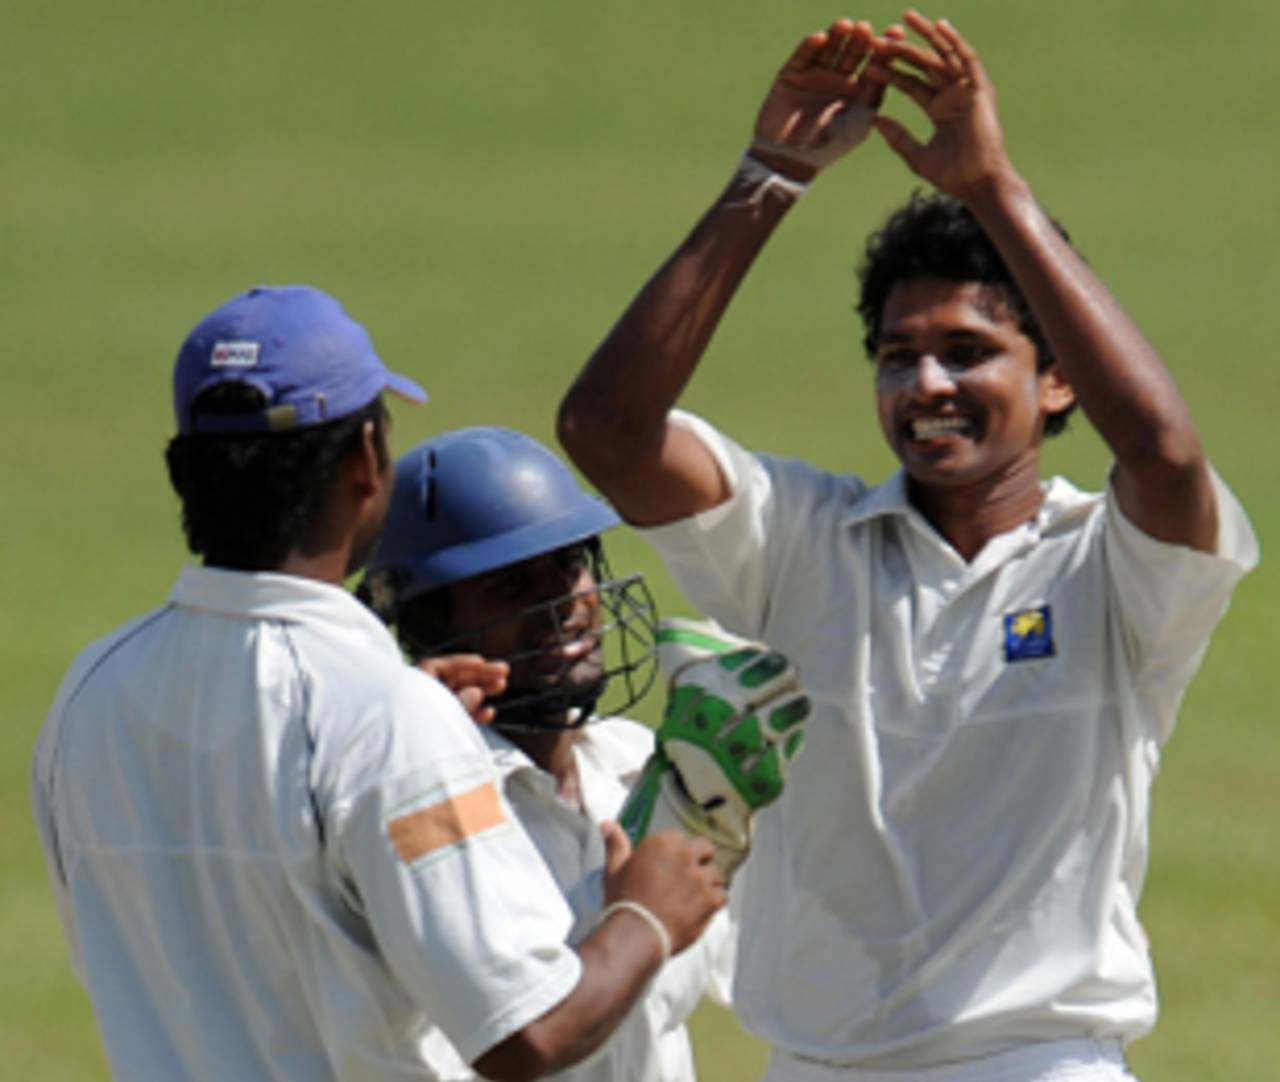 Suraj Mohamed is ecstatic after dismissing Kamran Akmal, Sri Lanka Cricket XI v Pakistanis, 3rd day, Colts Cricket Club Ground, Colombo, July 1, 2009 